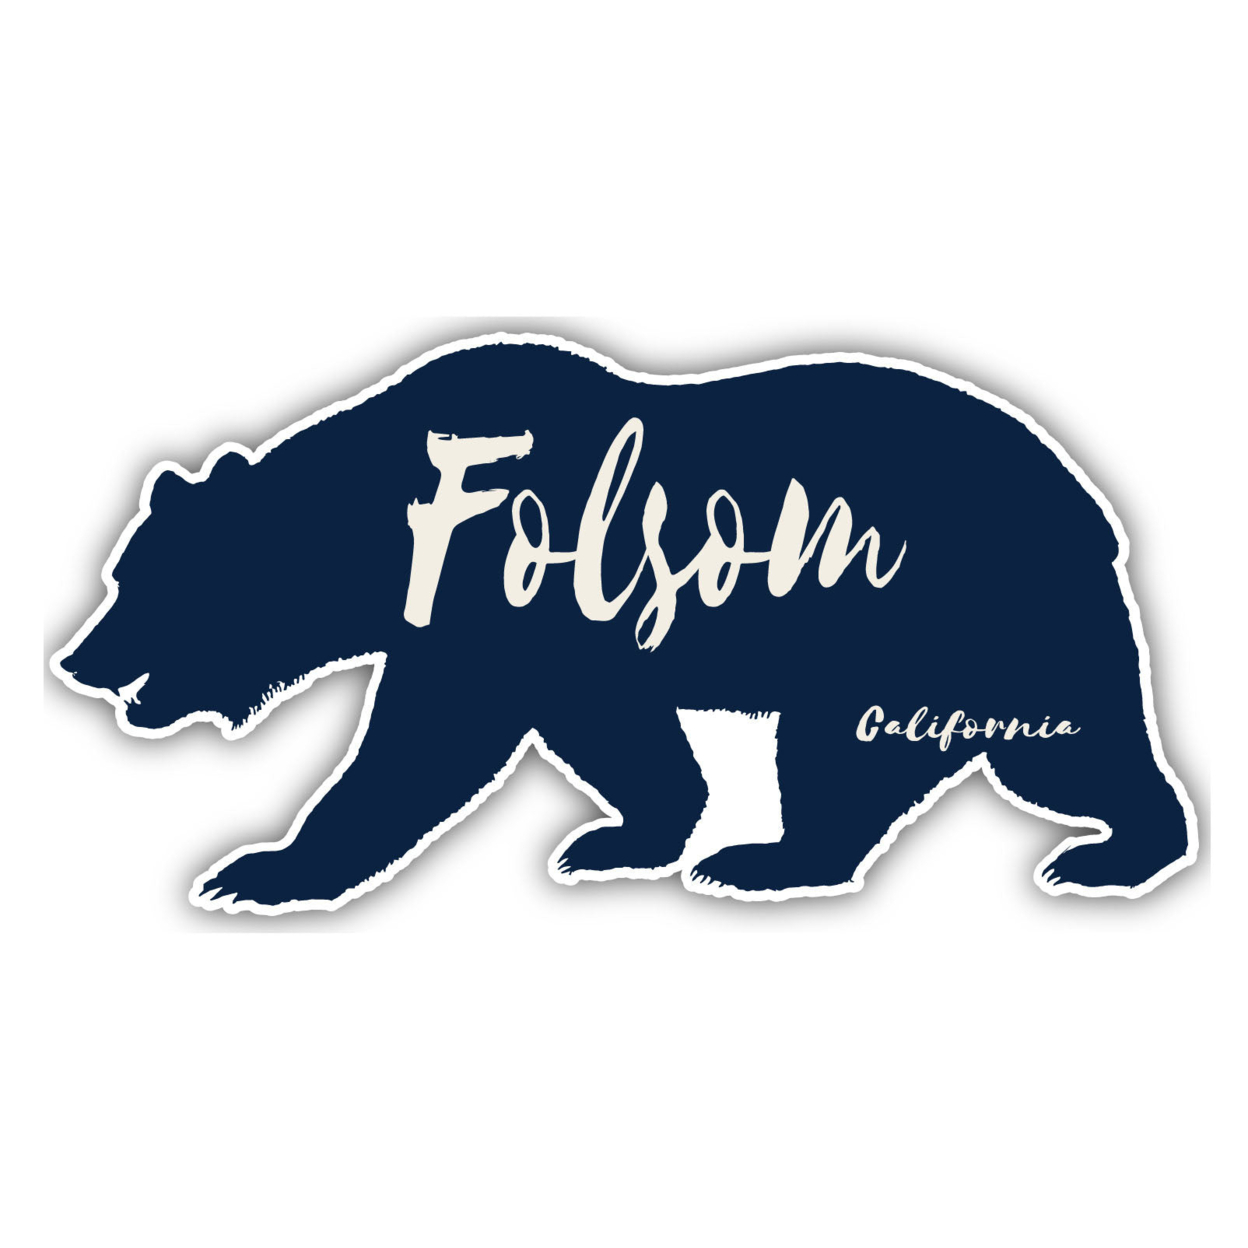 Folsom California Souvenir Decorative Stickers (Choose Theme And Size) - Single Unit, 2-Inch, Camp Life